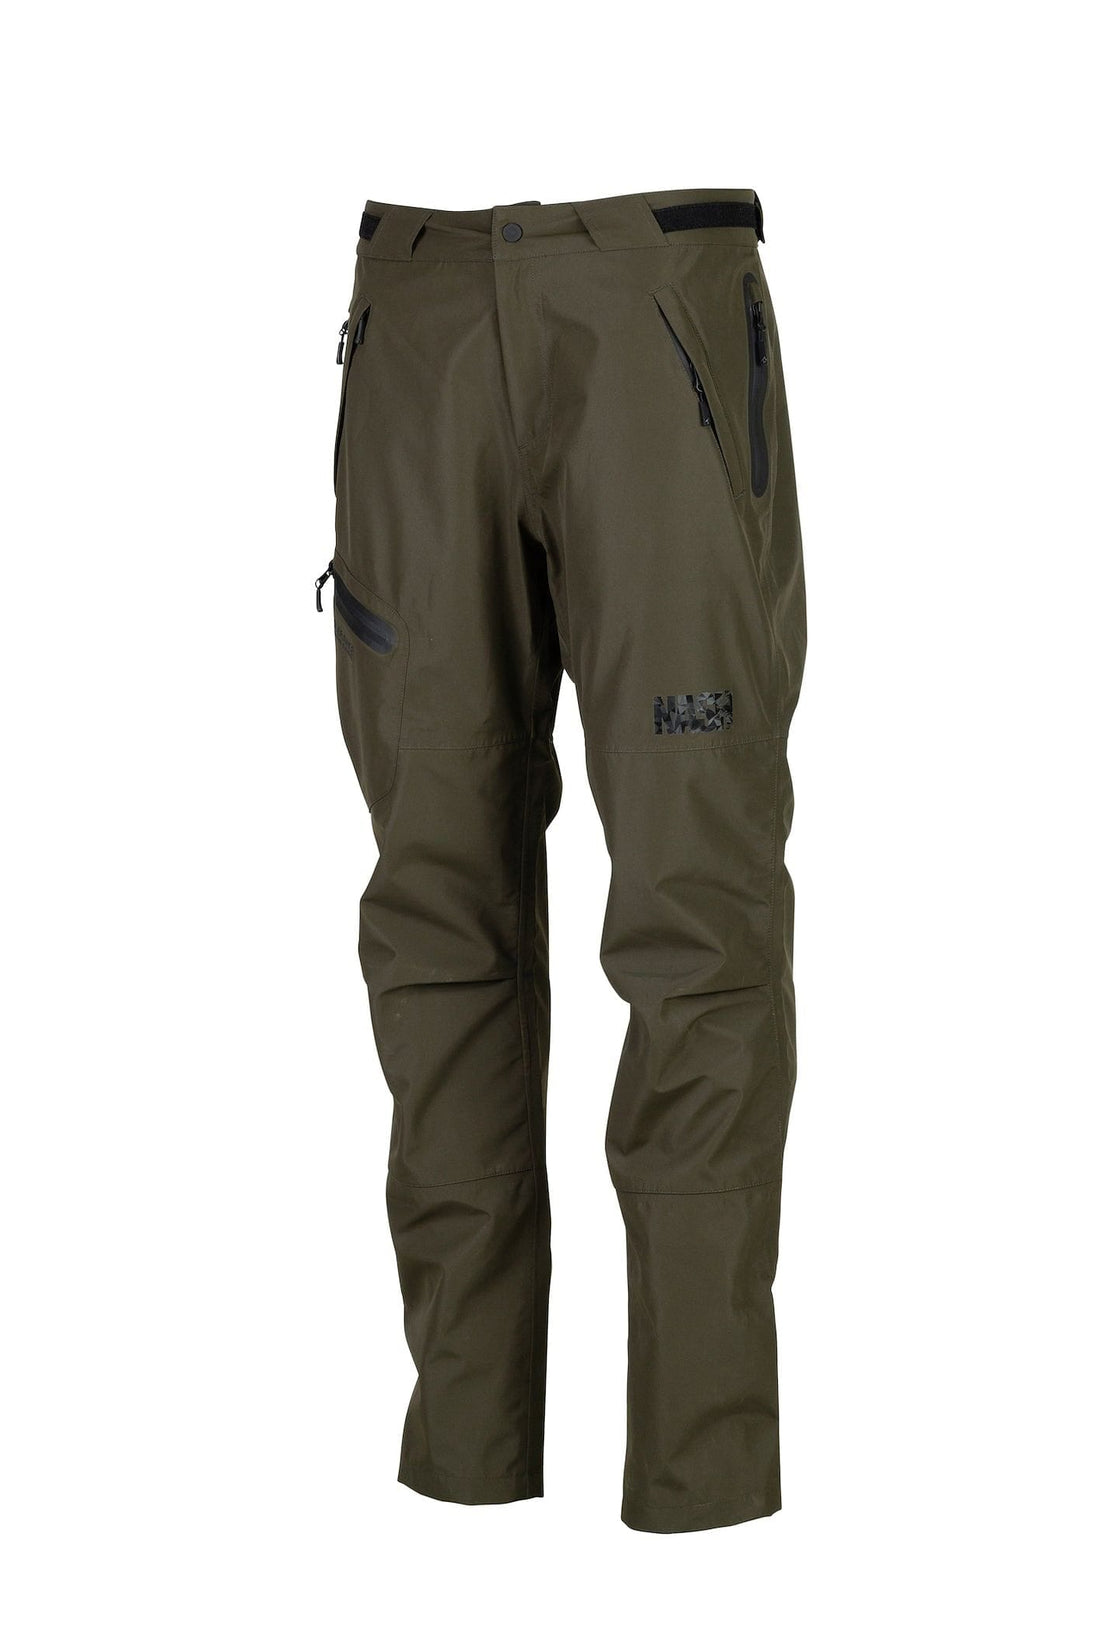 Nash ZT Extreme Waterproof Trousers Medium